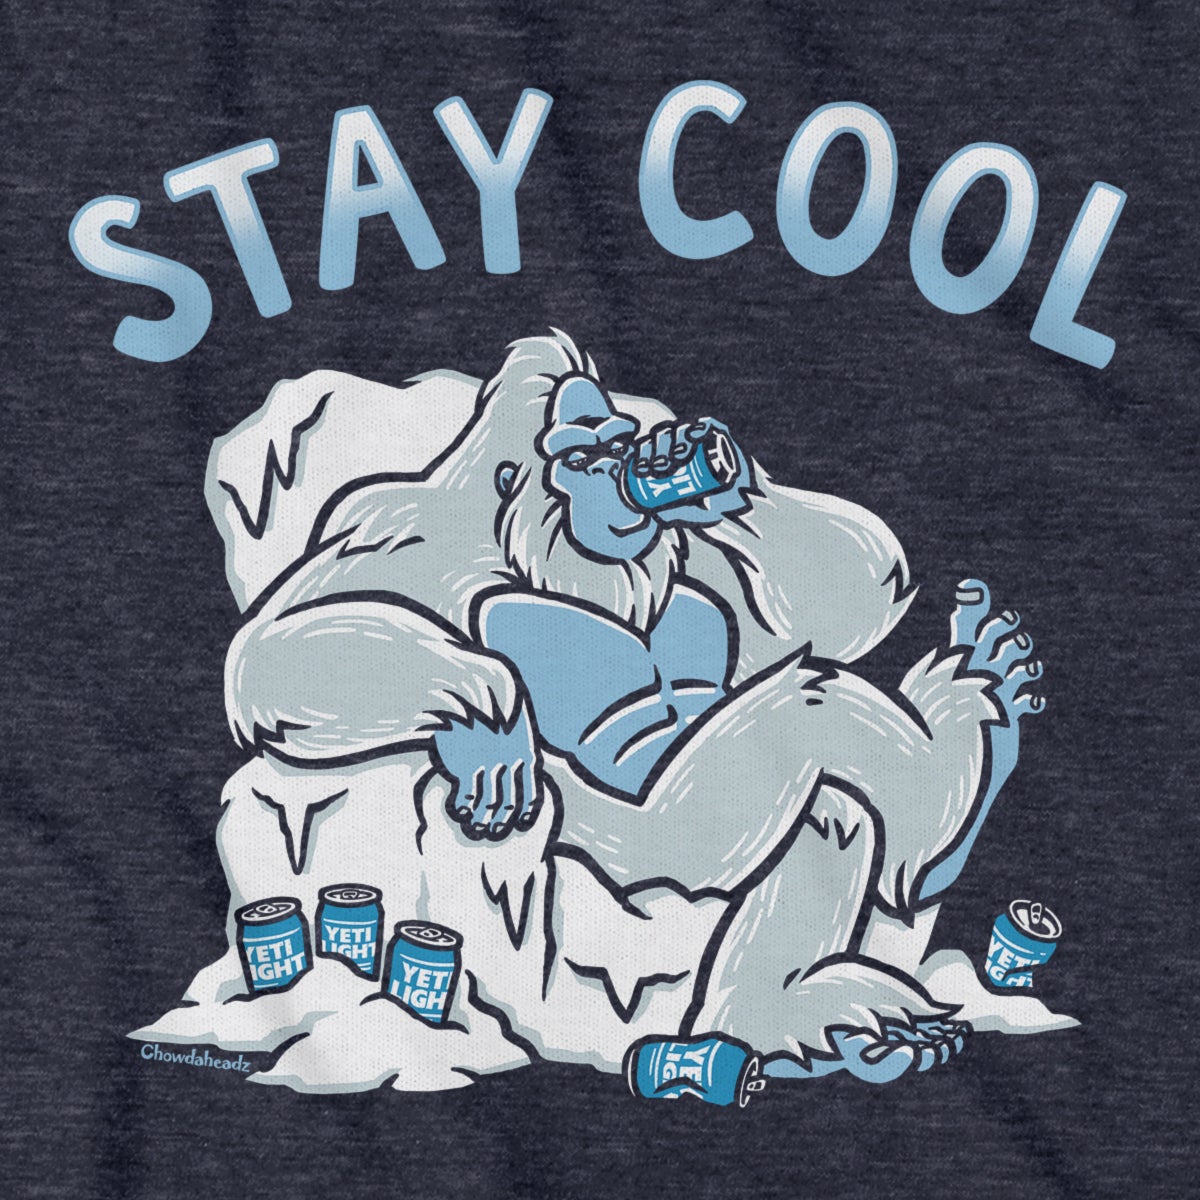 Stay Cool Yeti T-Shirt - Chowdaheadz